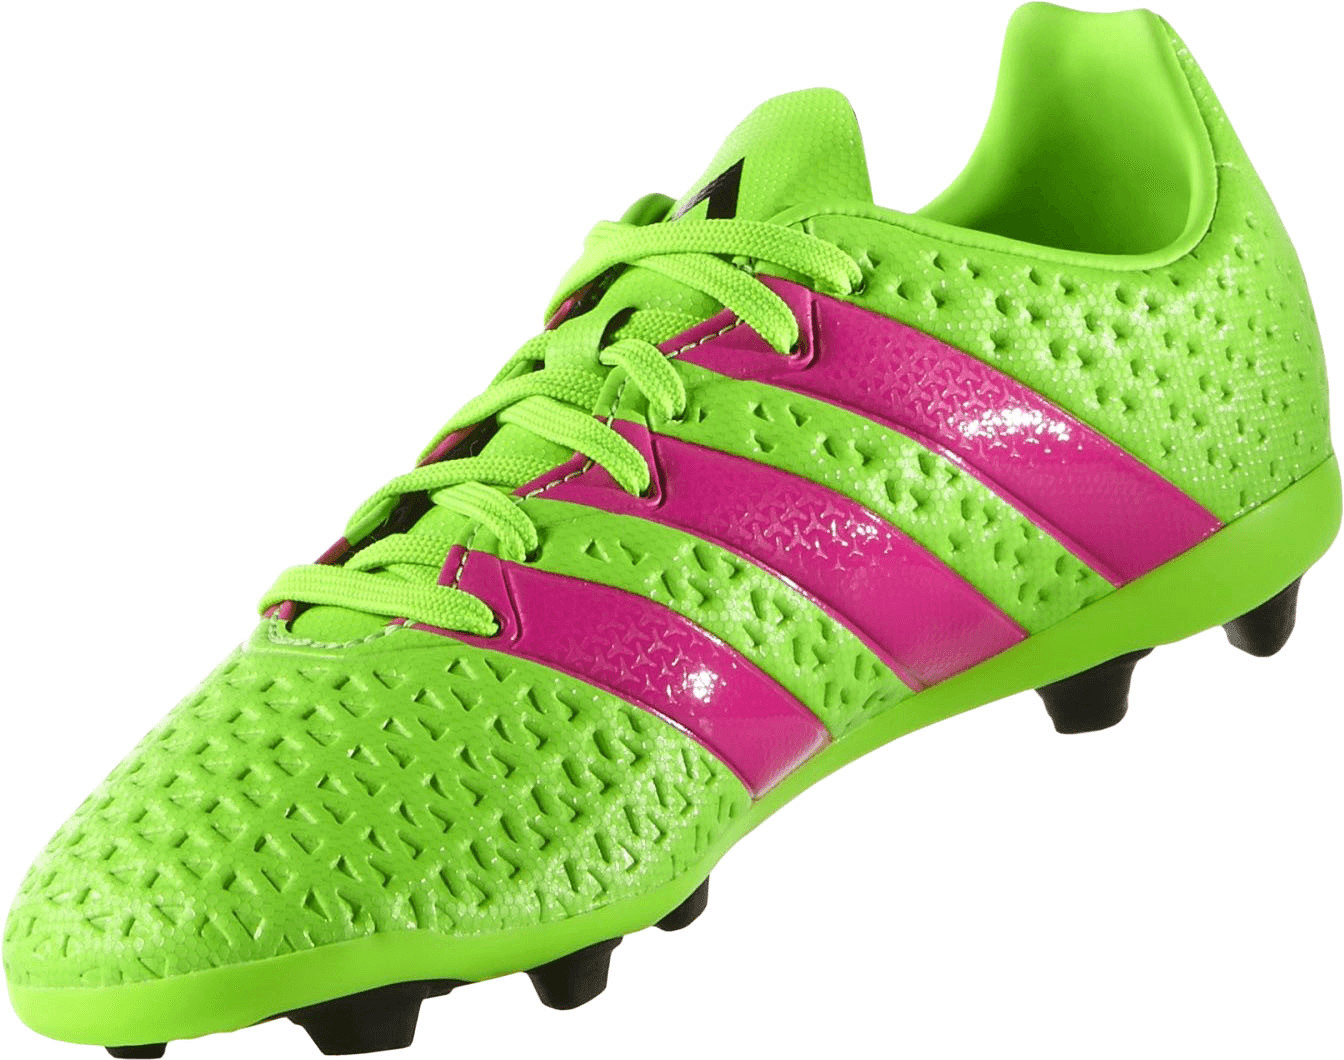 Adidas Ace 16.4 FxG Jr solar green/shock pink/core black